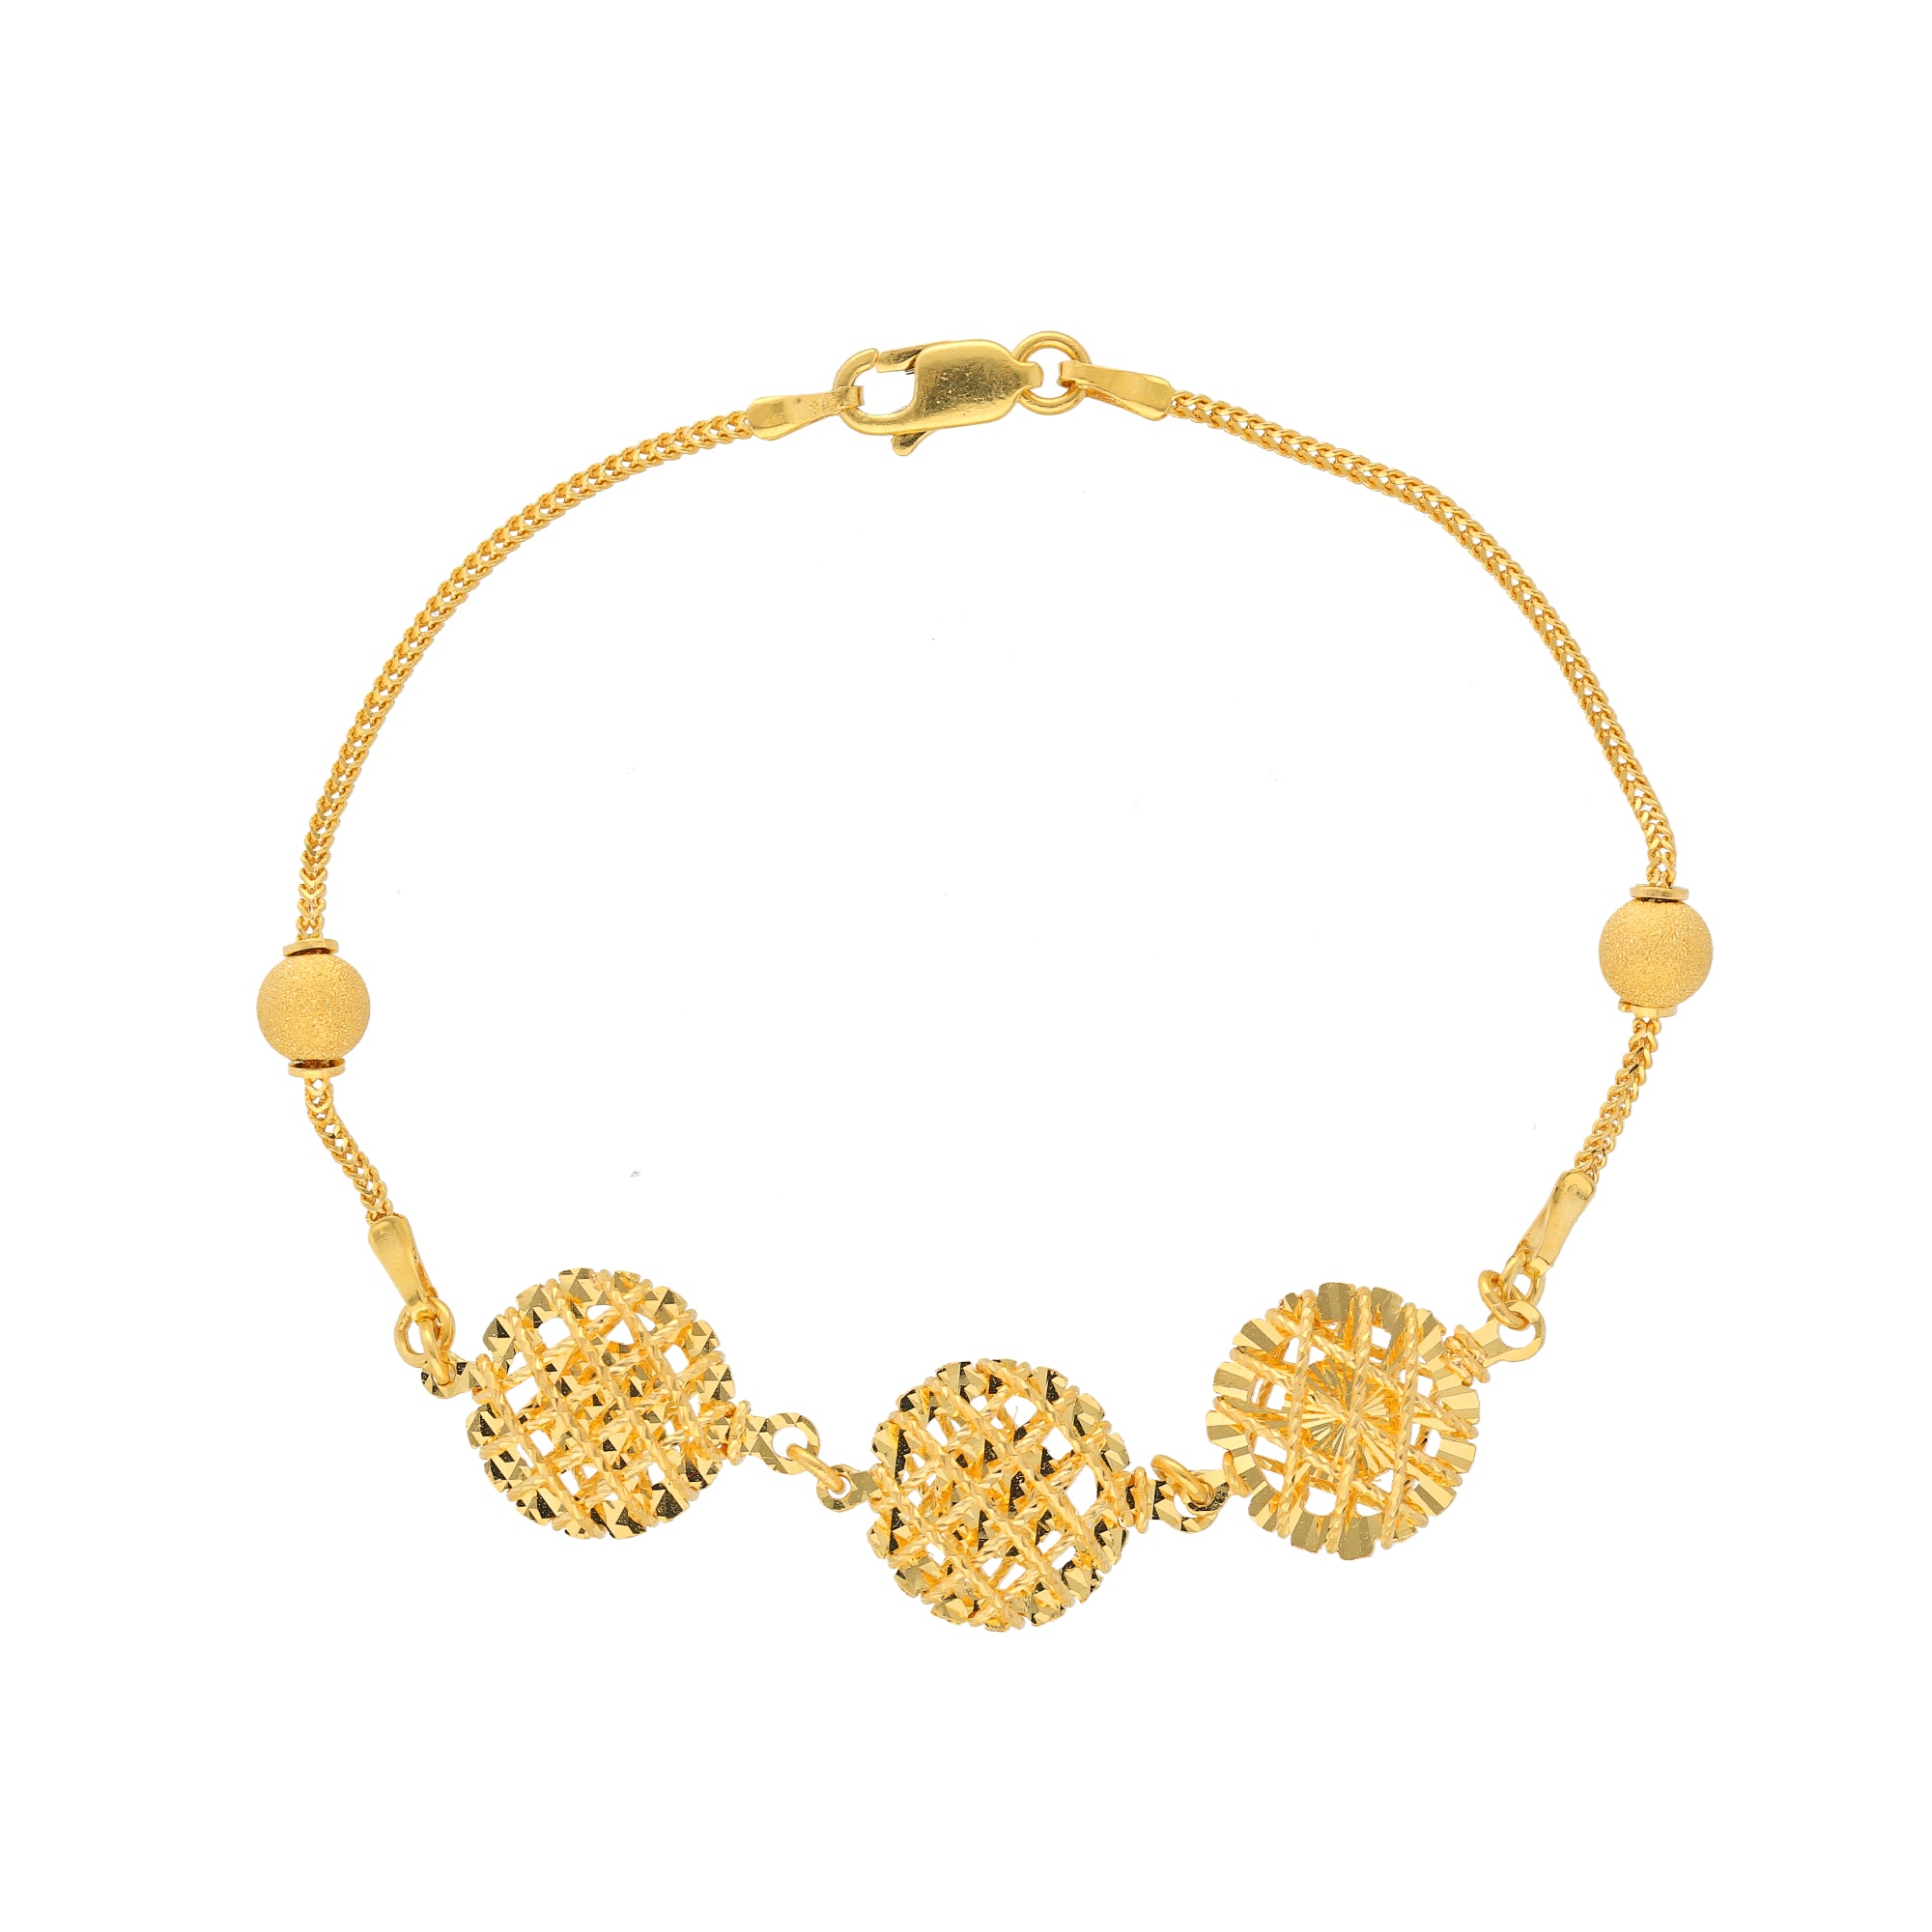 Buy Baby Bracelet 24k Gold Online In India - Etsy India